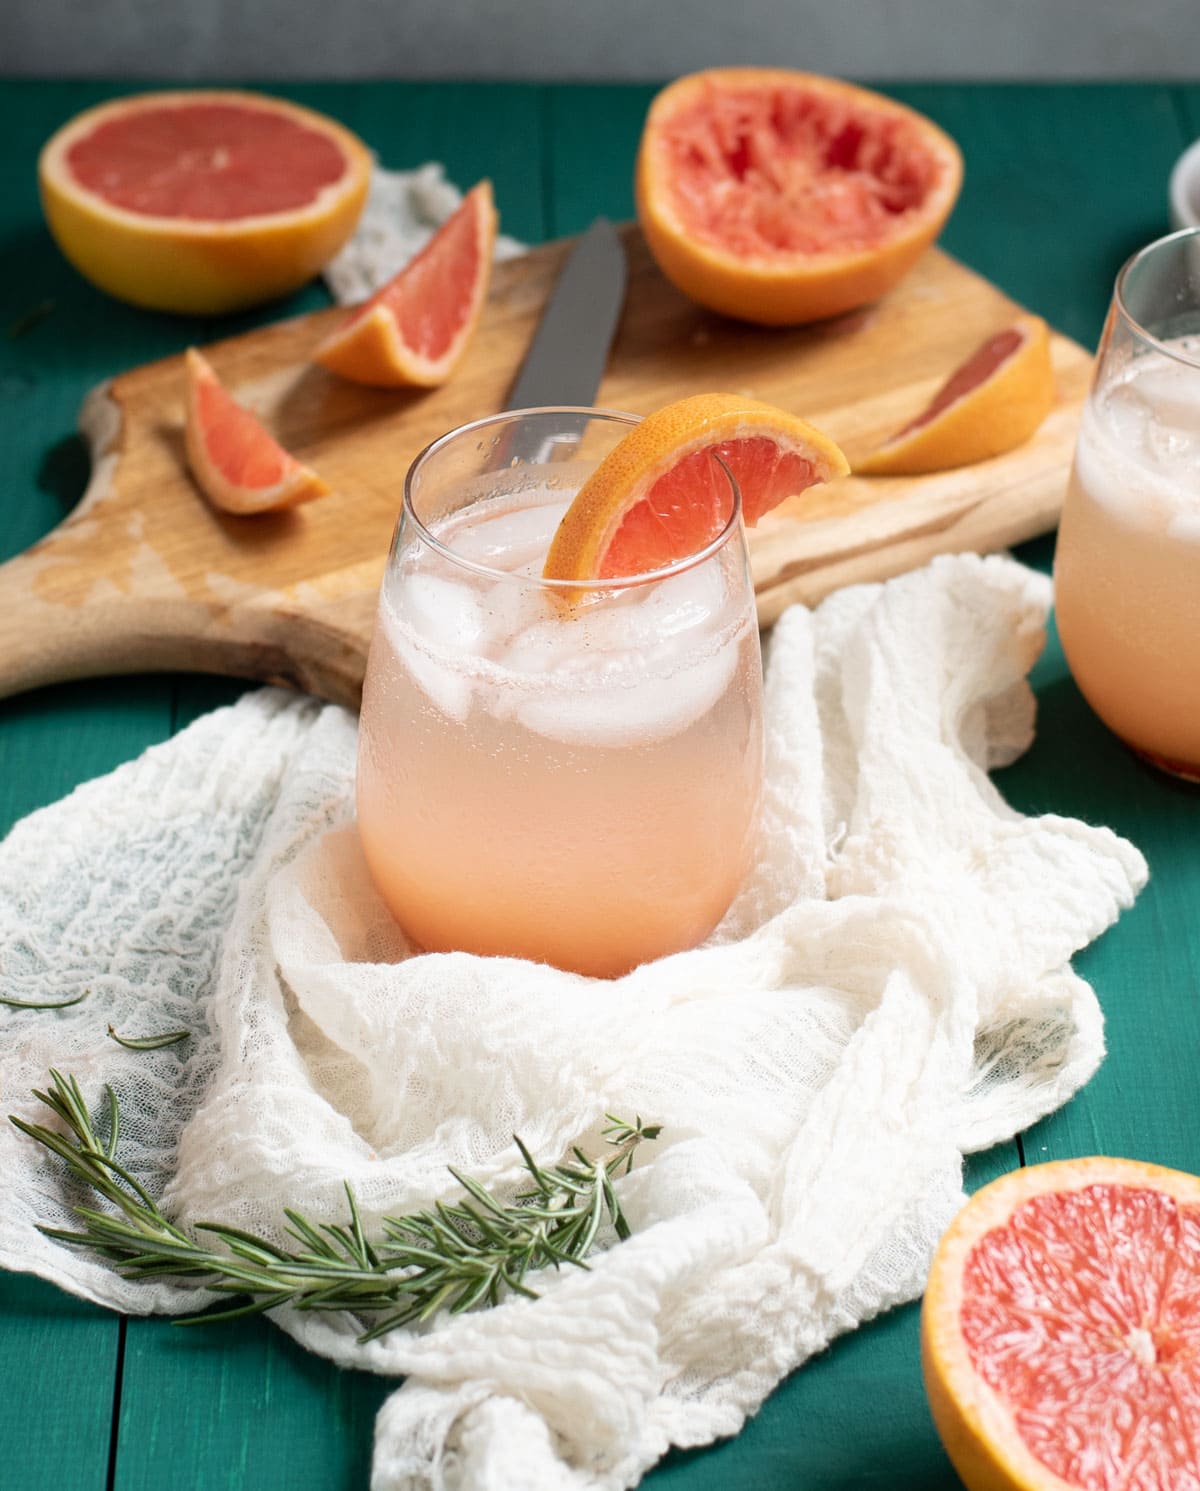 Rosemary grapefruit mocktail with grapefruit garnish